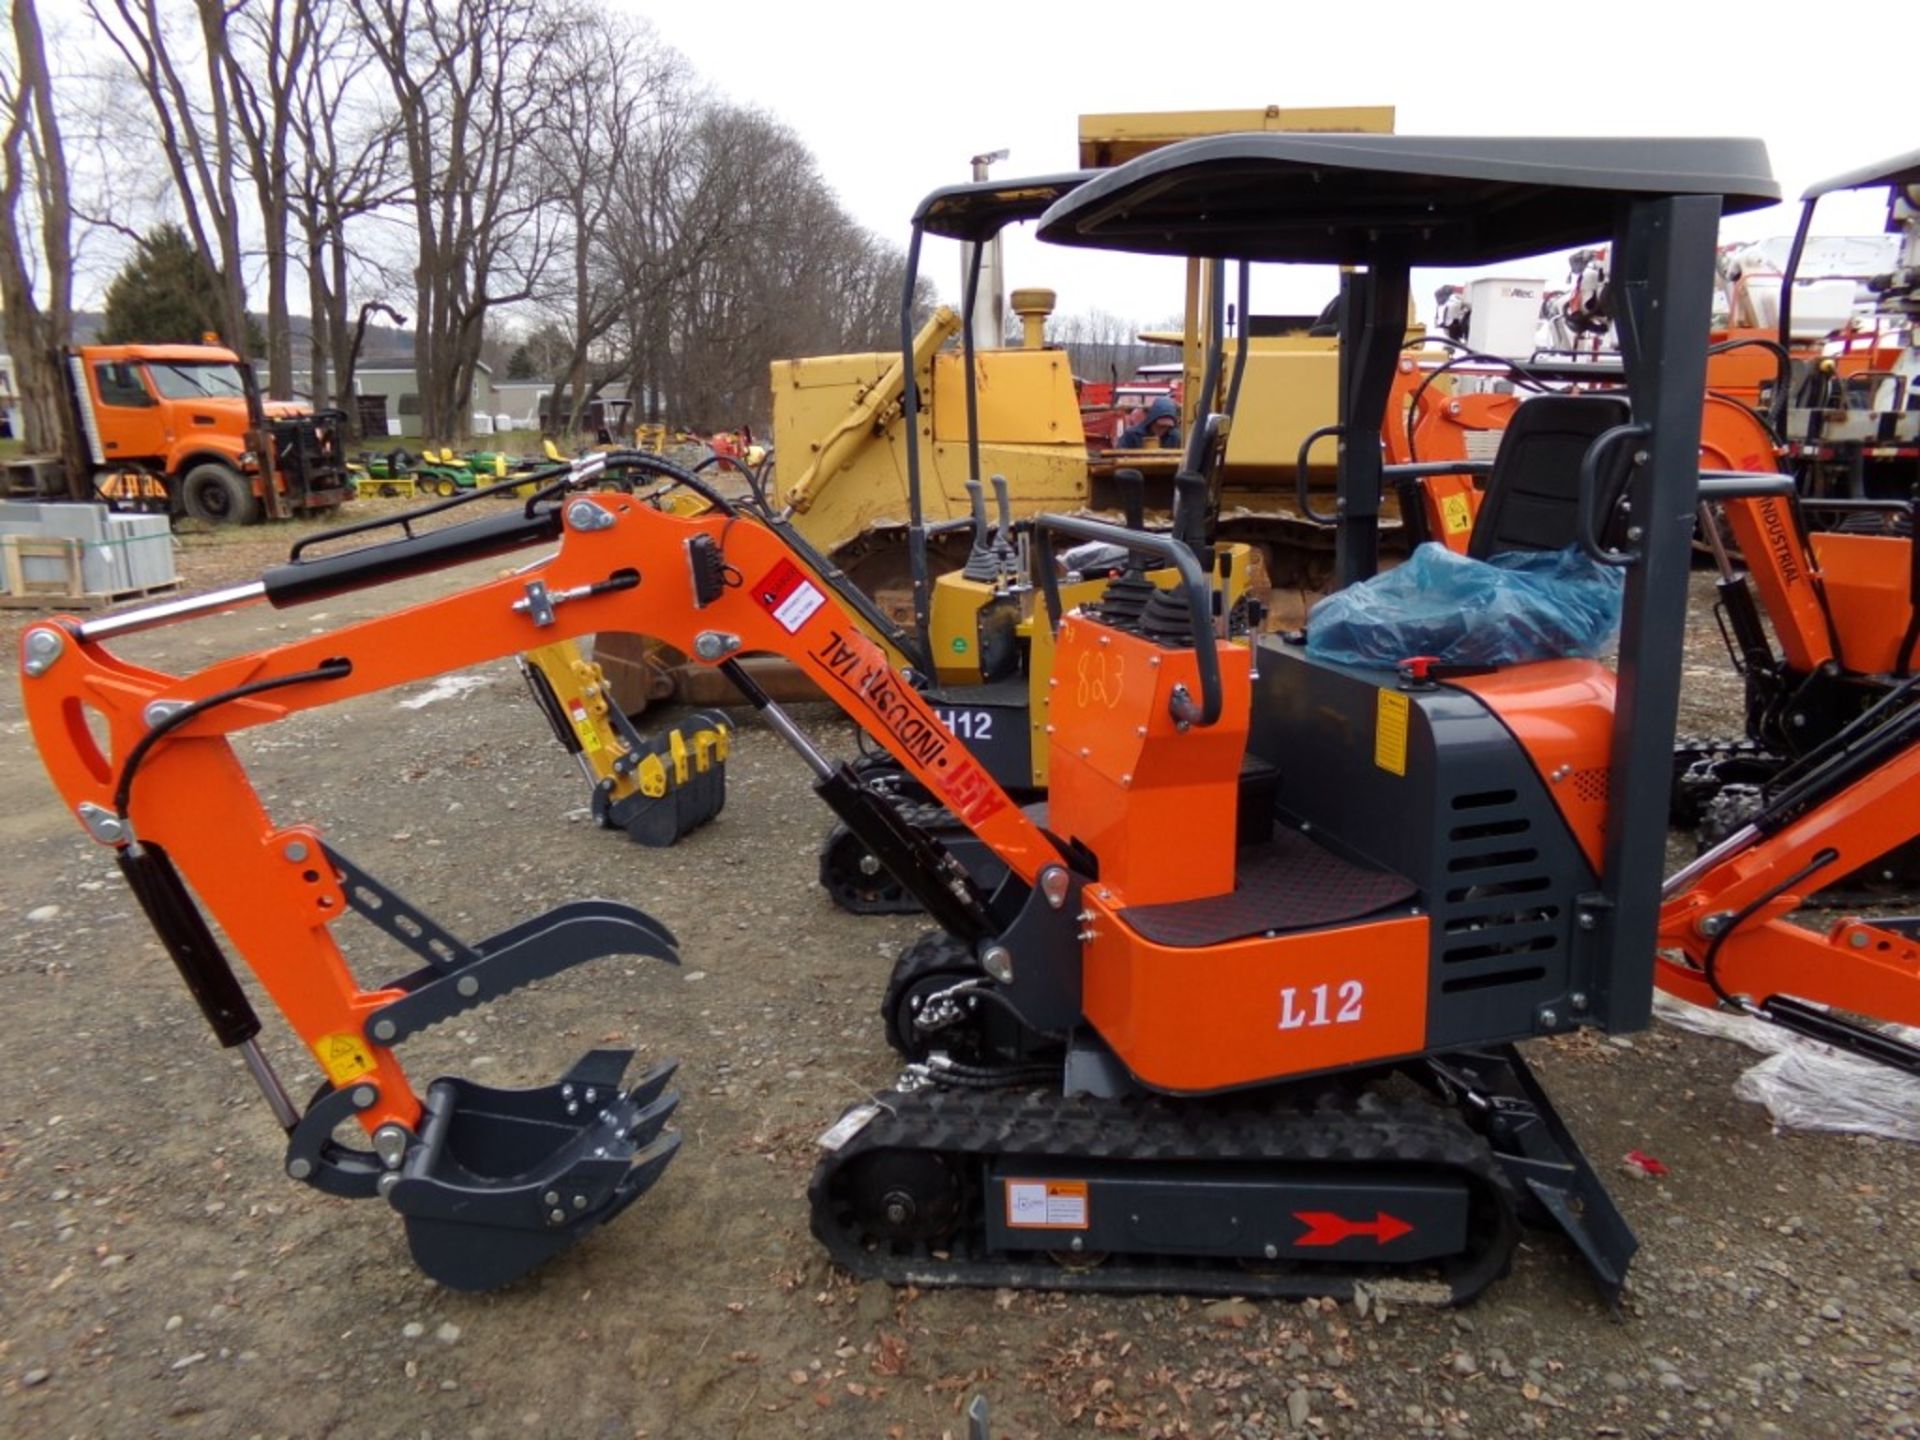 New AGT L12 Mini Excavator with Canopy, Has Manual Thumb, Orange, Ser # 633466